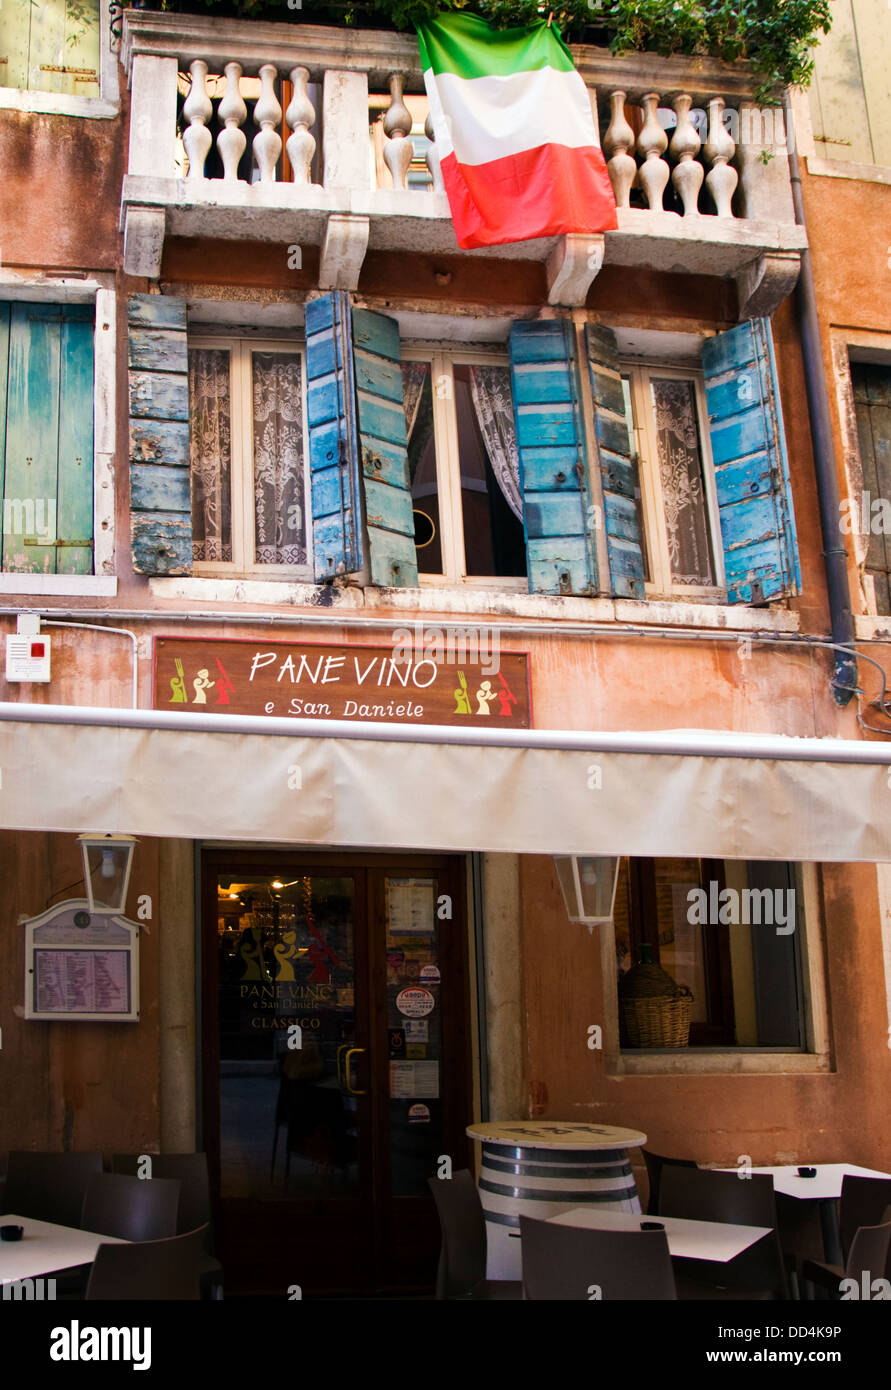 Pane Vino e San Daniele cafe bar restaurant Stock Photo